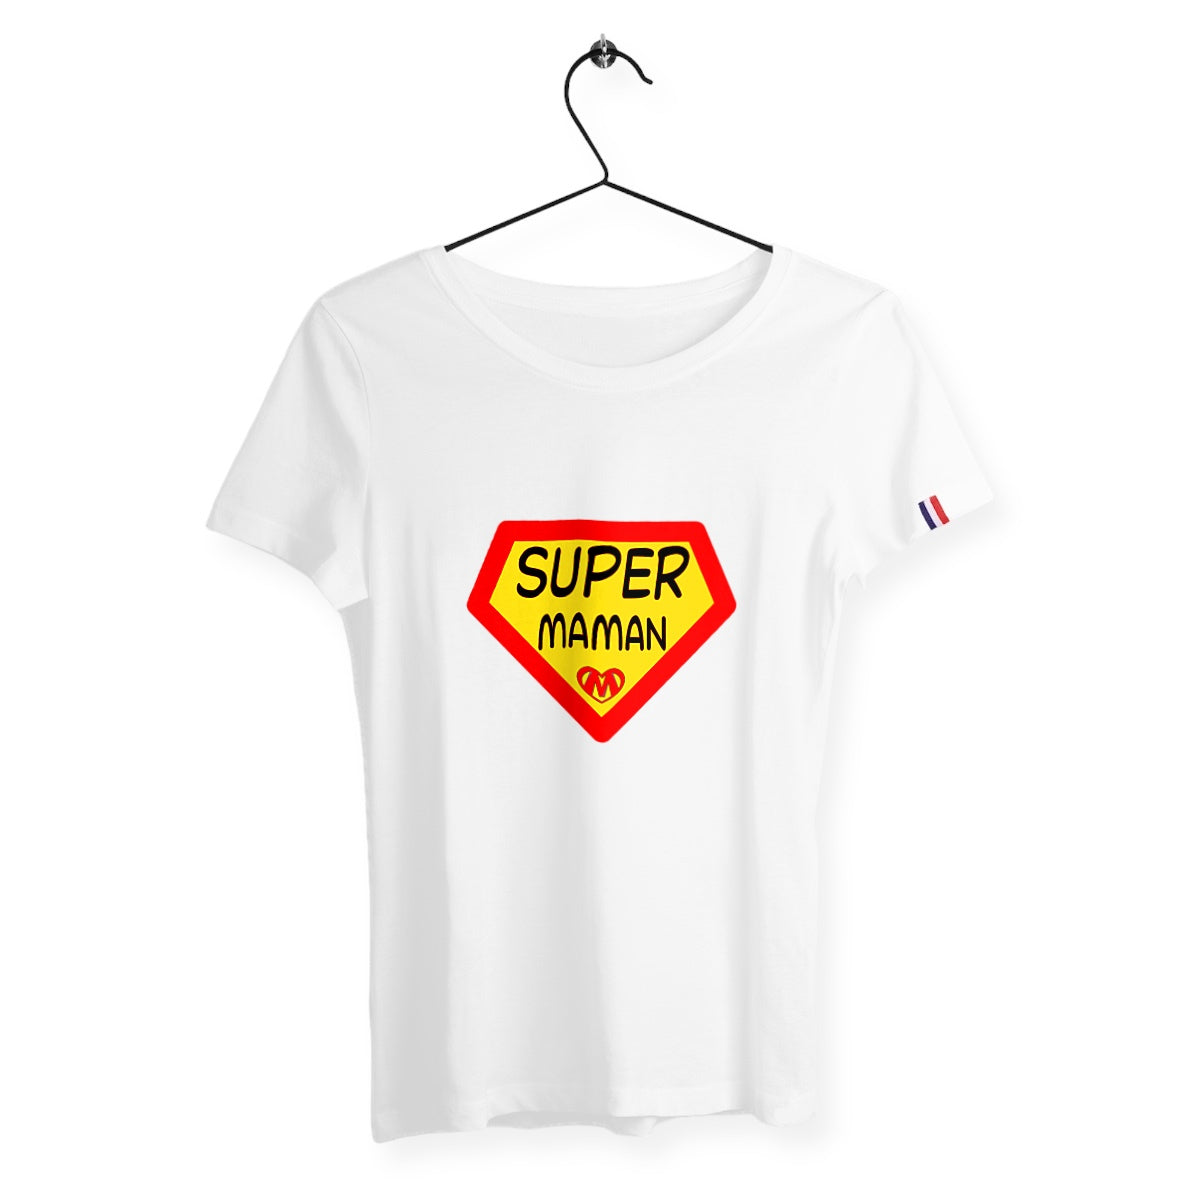 T-shirt super maman France édition